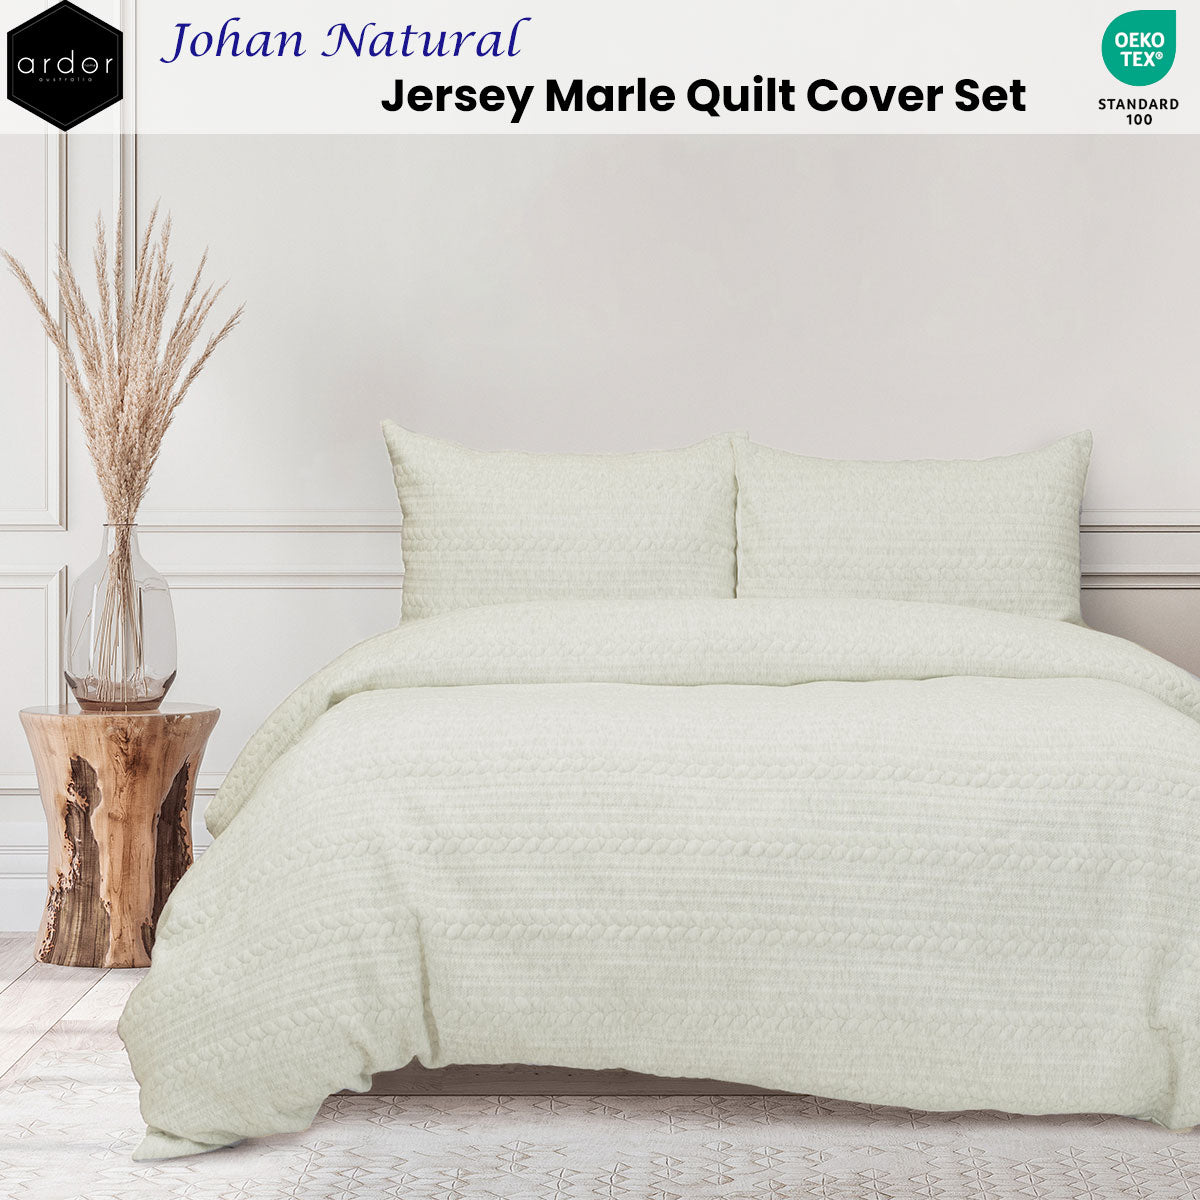 Ardor Johan Natural Jersey Marle Quilt Cover Set King